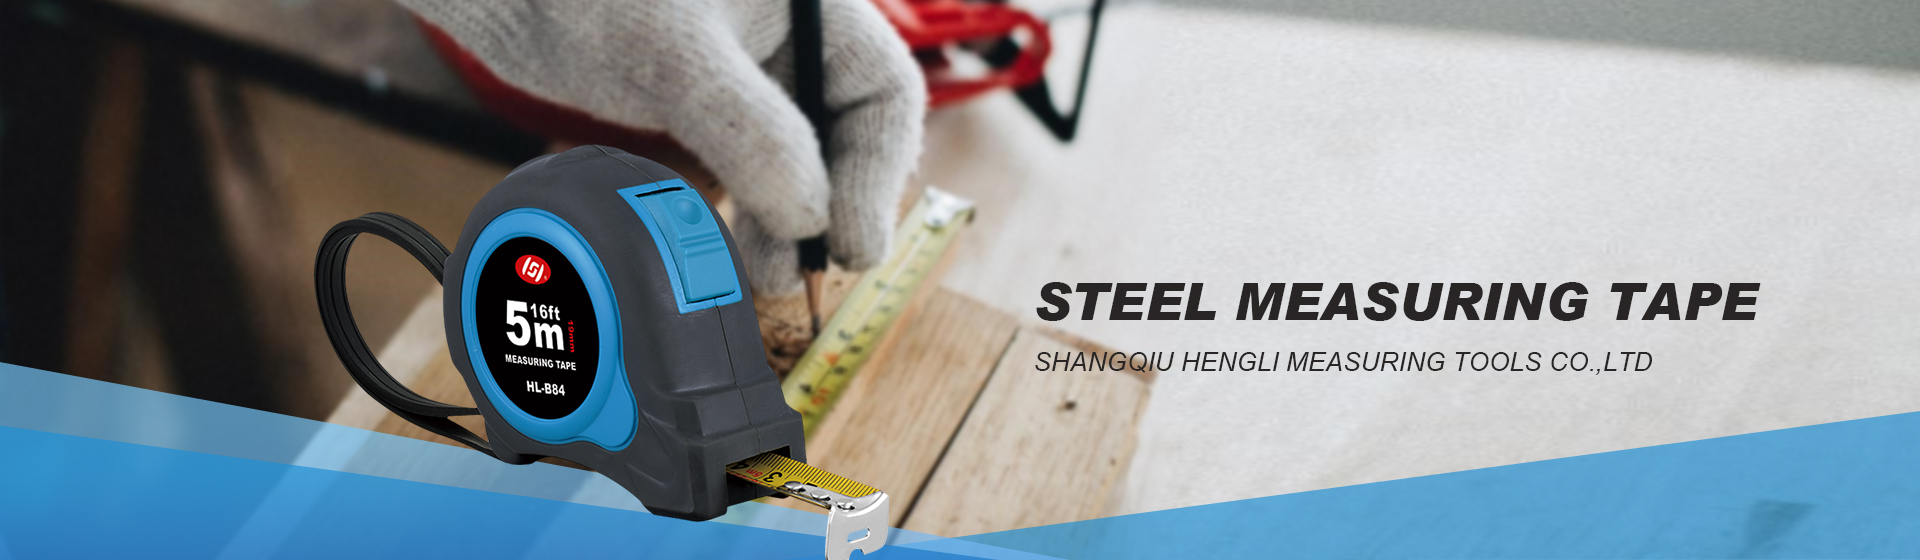 Shangqiu Hengli Measuring Tools Co.,Ltd